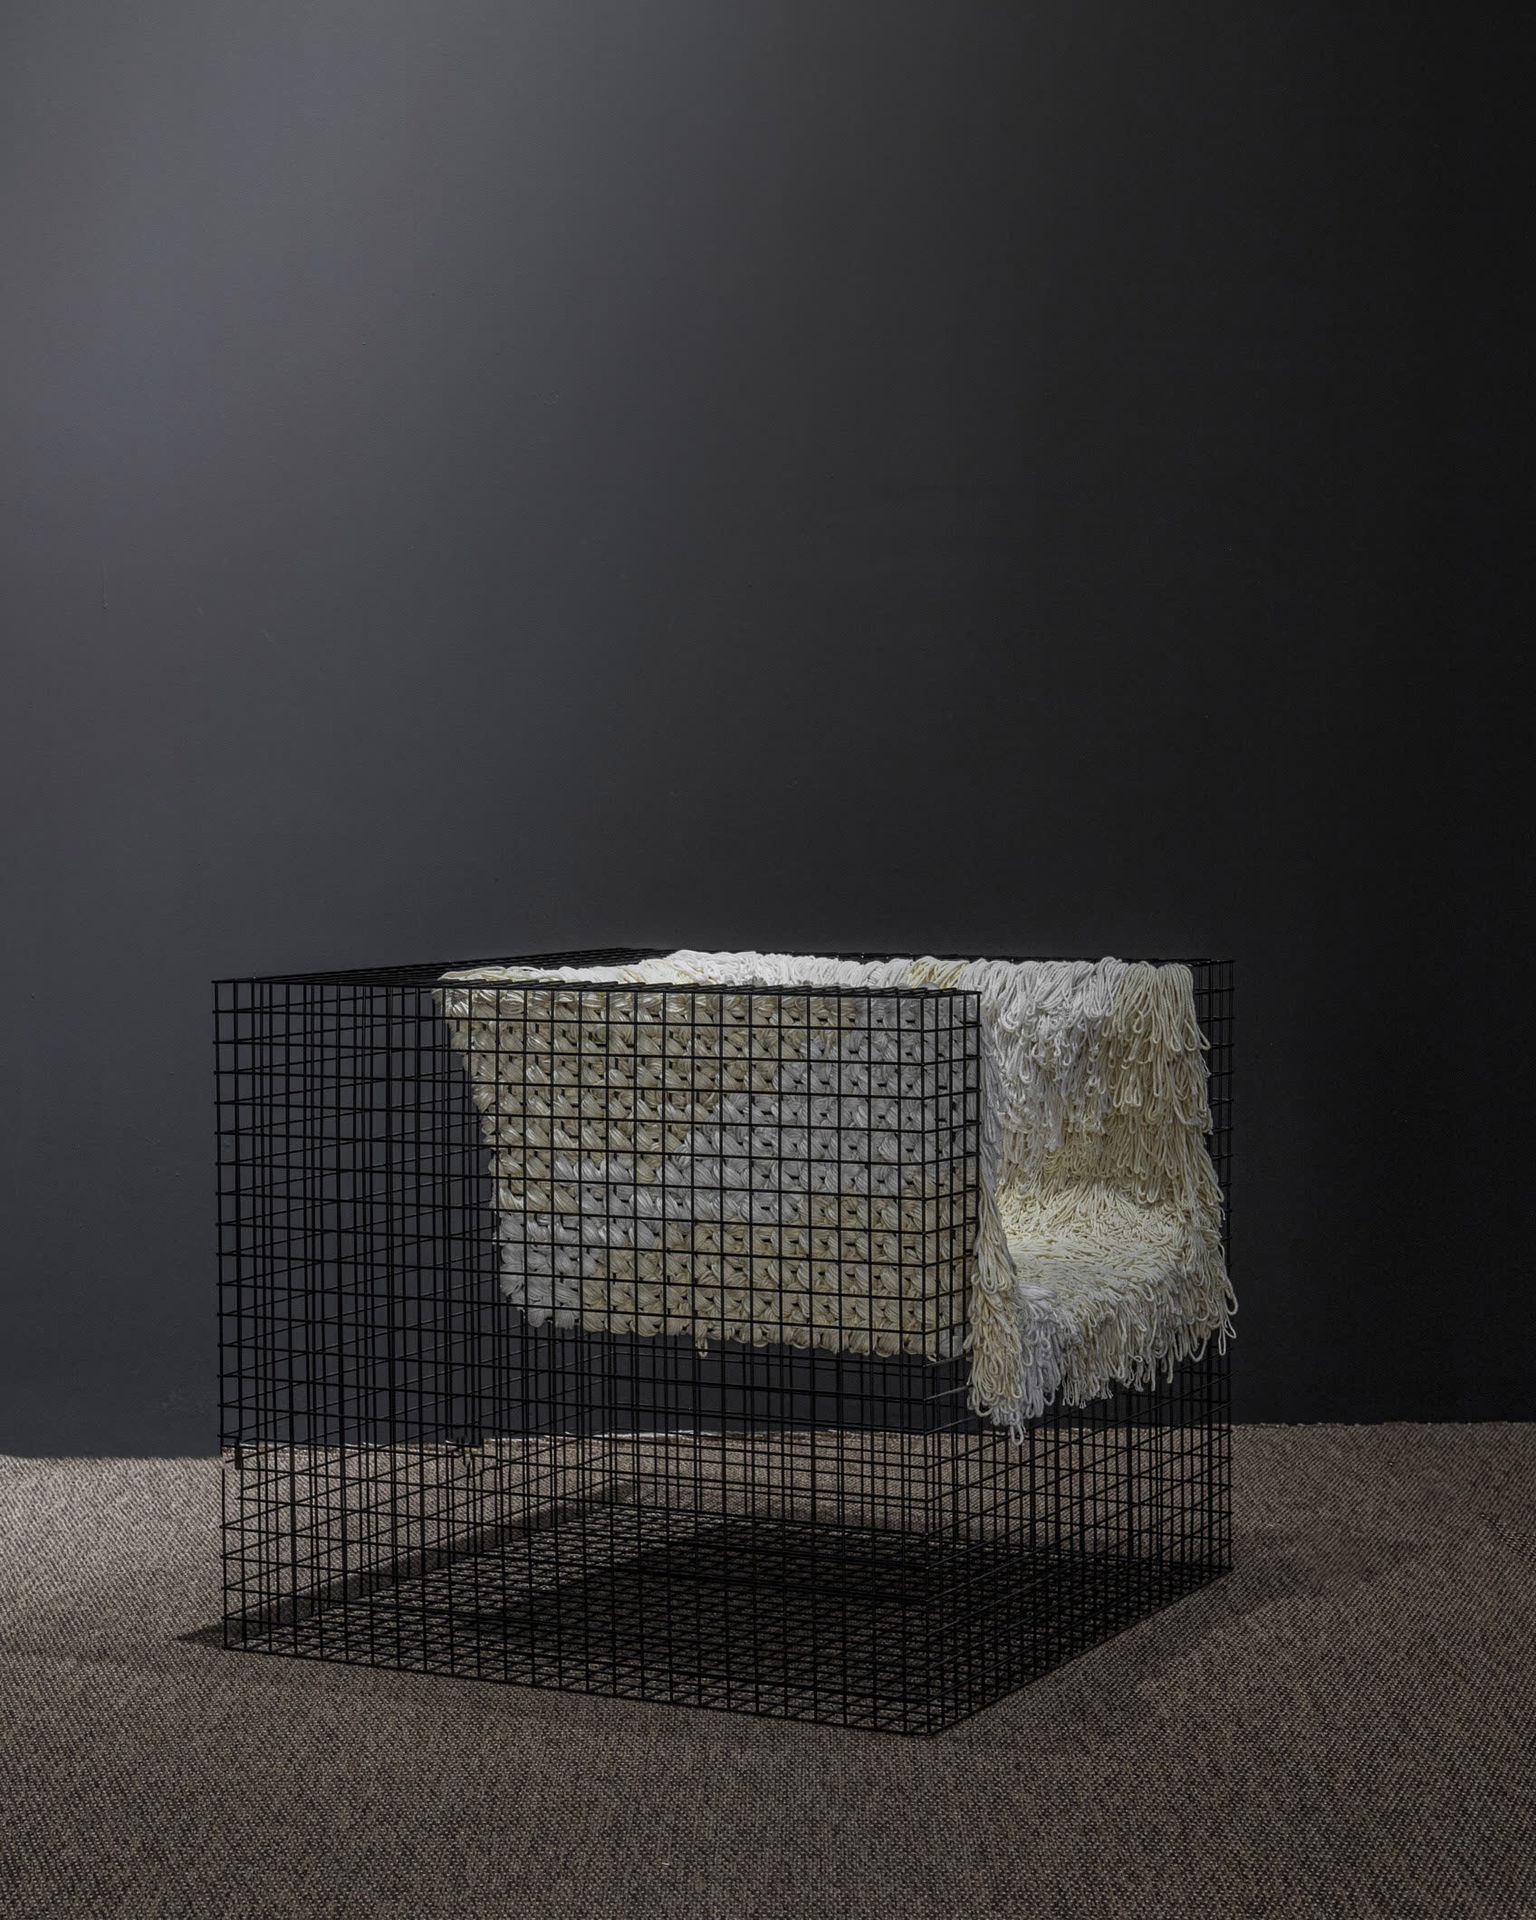 GEDION KIM 扶手椅
铁丝，棉线
2019
高66宽78深80厘米
出处：Iham画廊